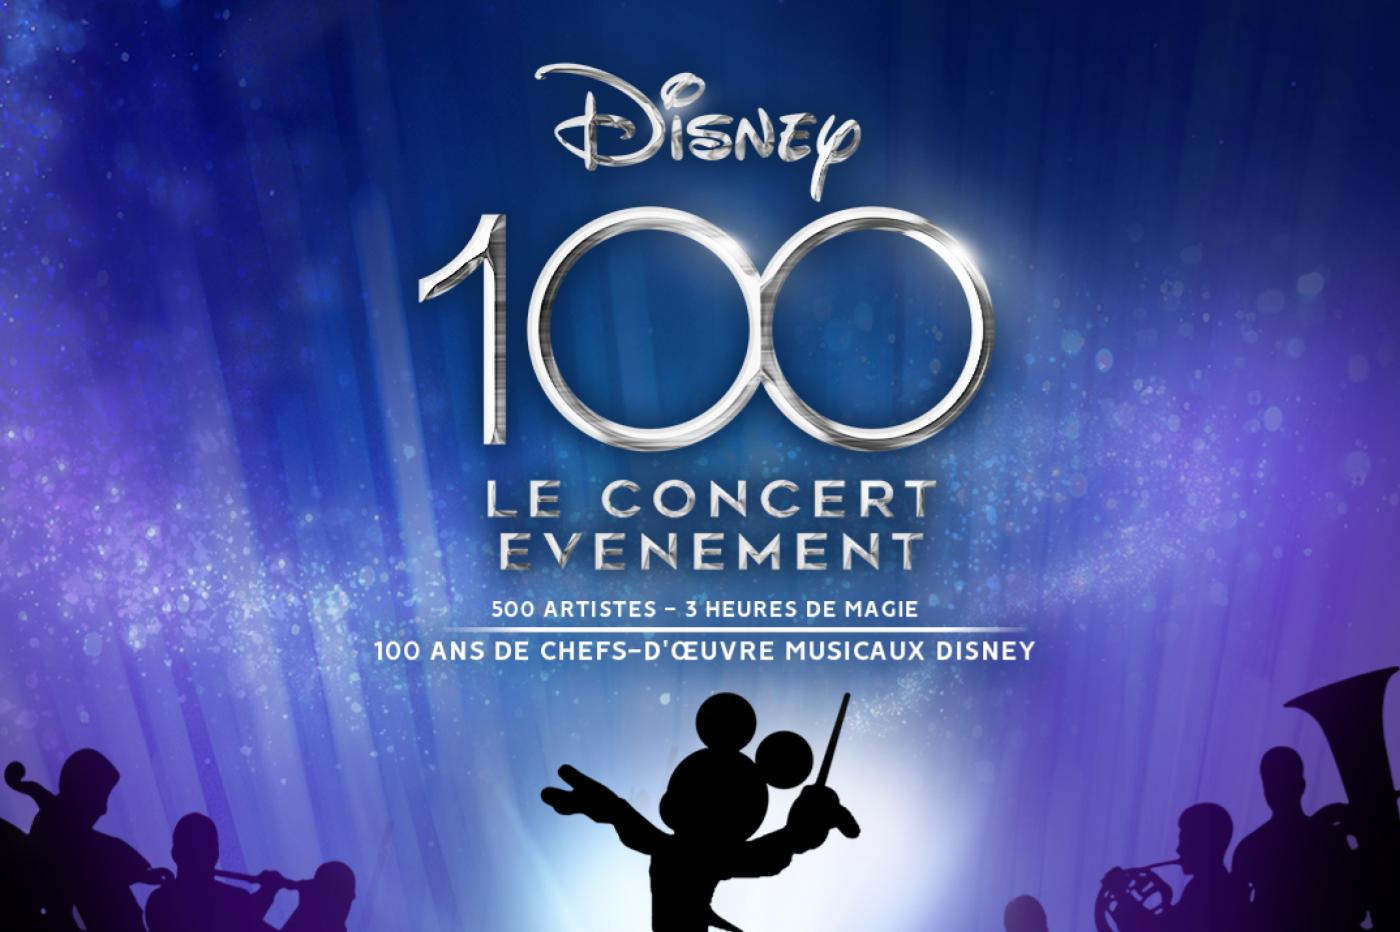 Disney concert 100 ans